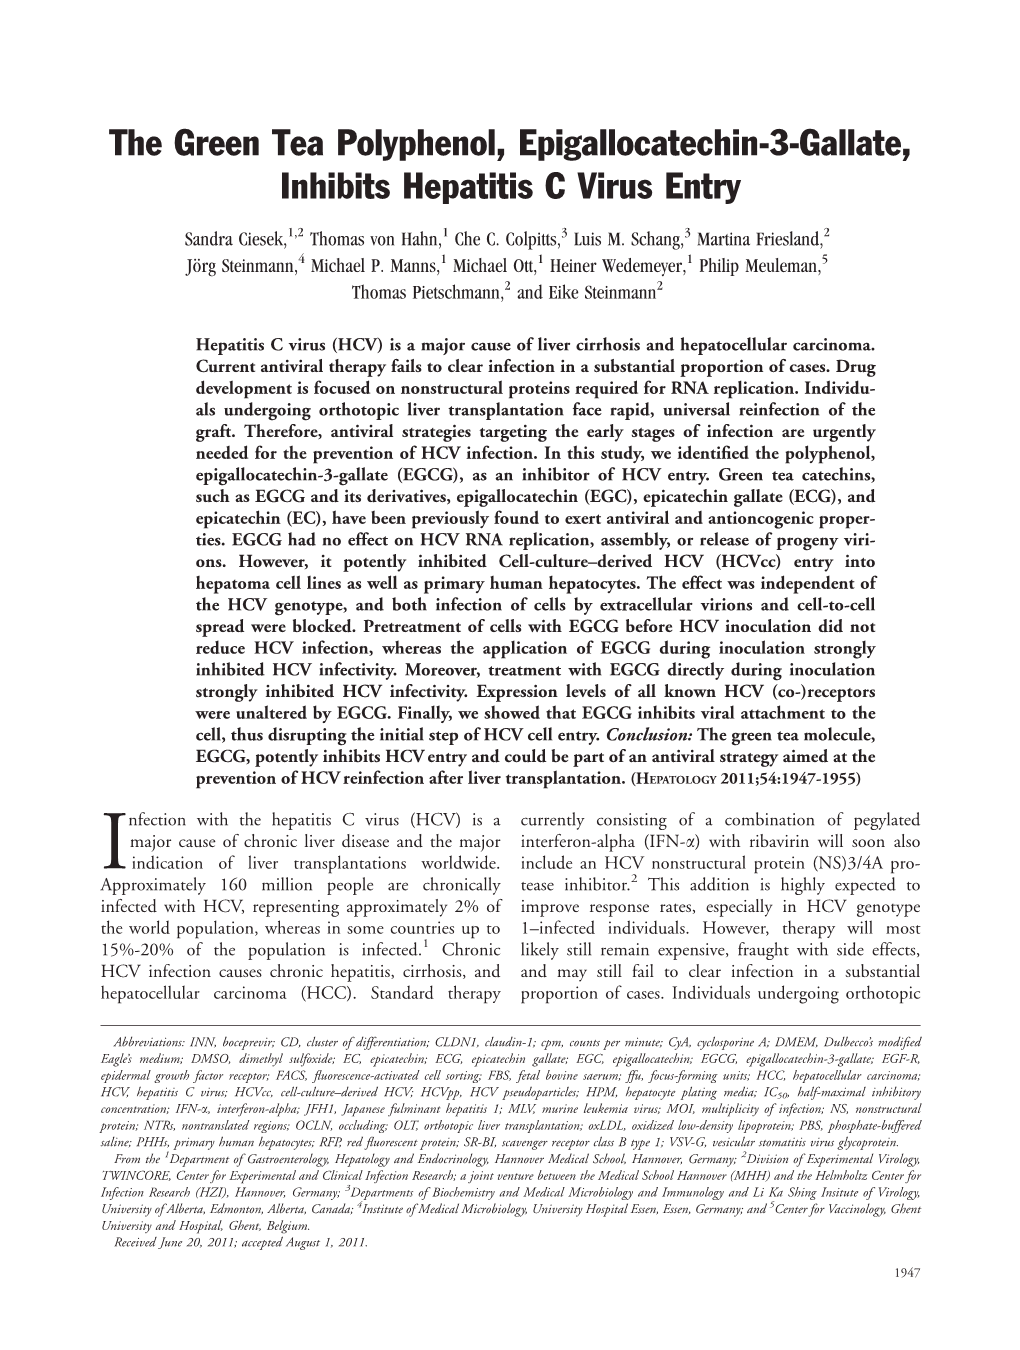 The Green Tea Polyphenol, Epigallocatechin3gallate, Inhibits Hepatitis C Virus Entry